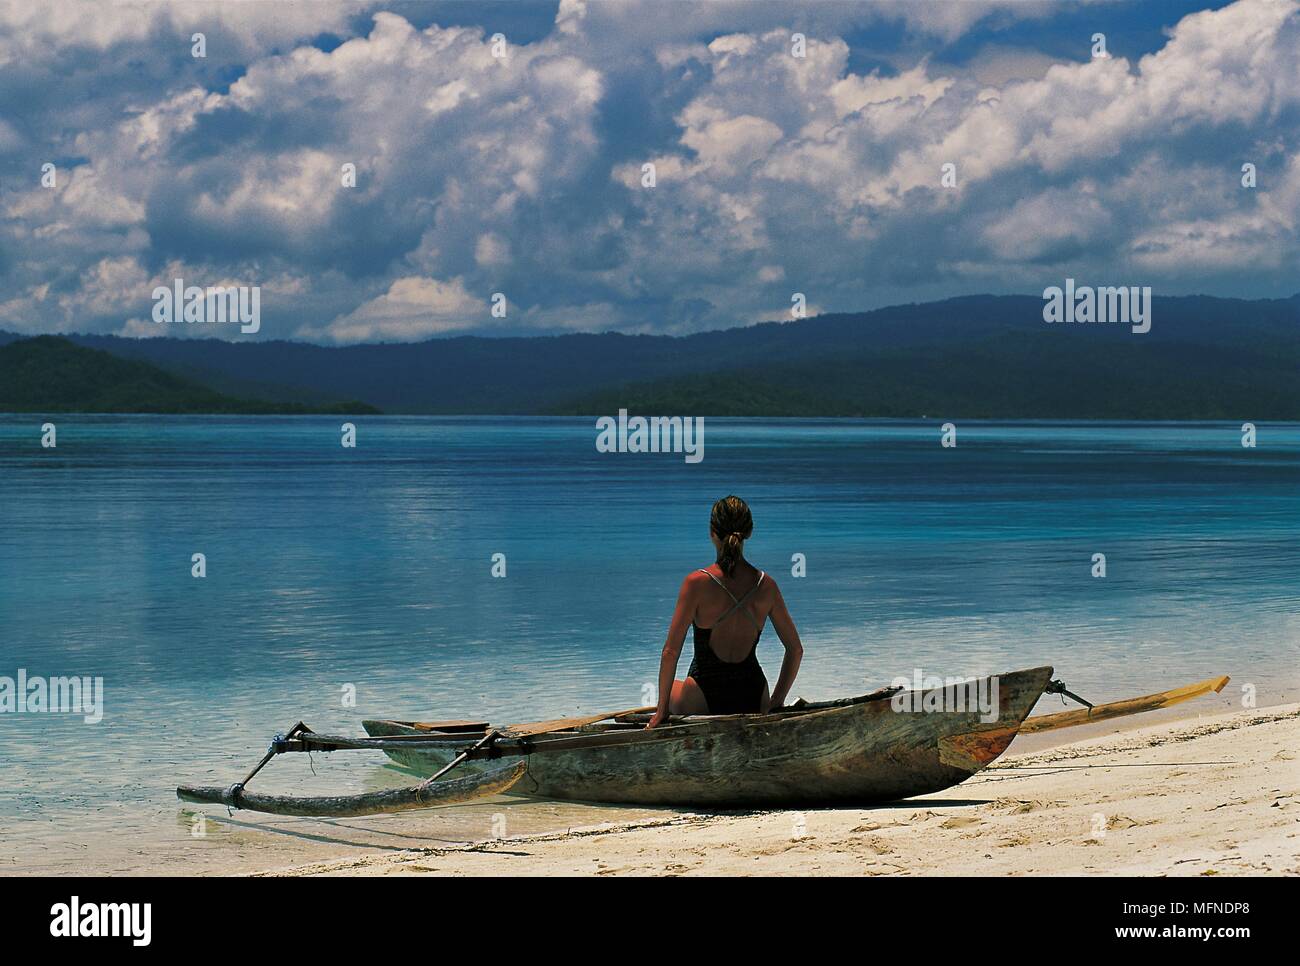 Tourist on Wai Island beach, Raja Ampat, West Papua, Indonesia   Date: 19.07.2006   Ref: B377 095549 0017  COMPULSORY CREDIT:  Andrea & Antonella Ferr Stock Photo